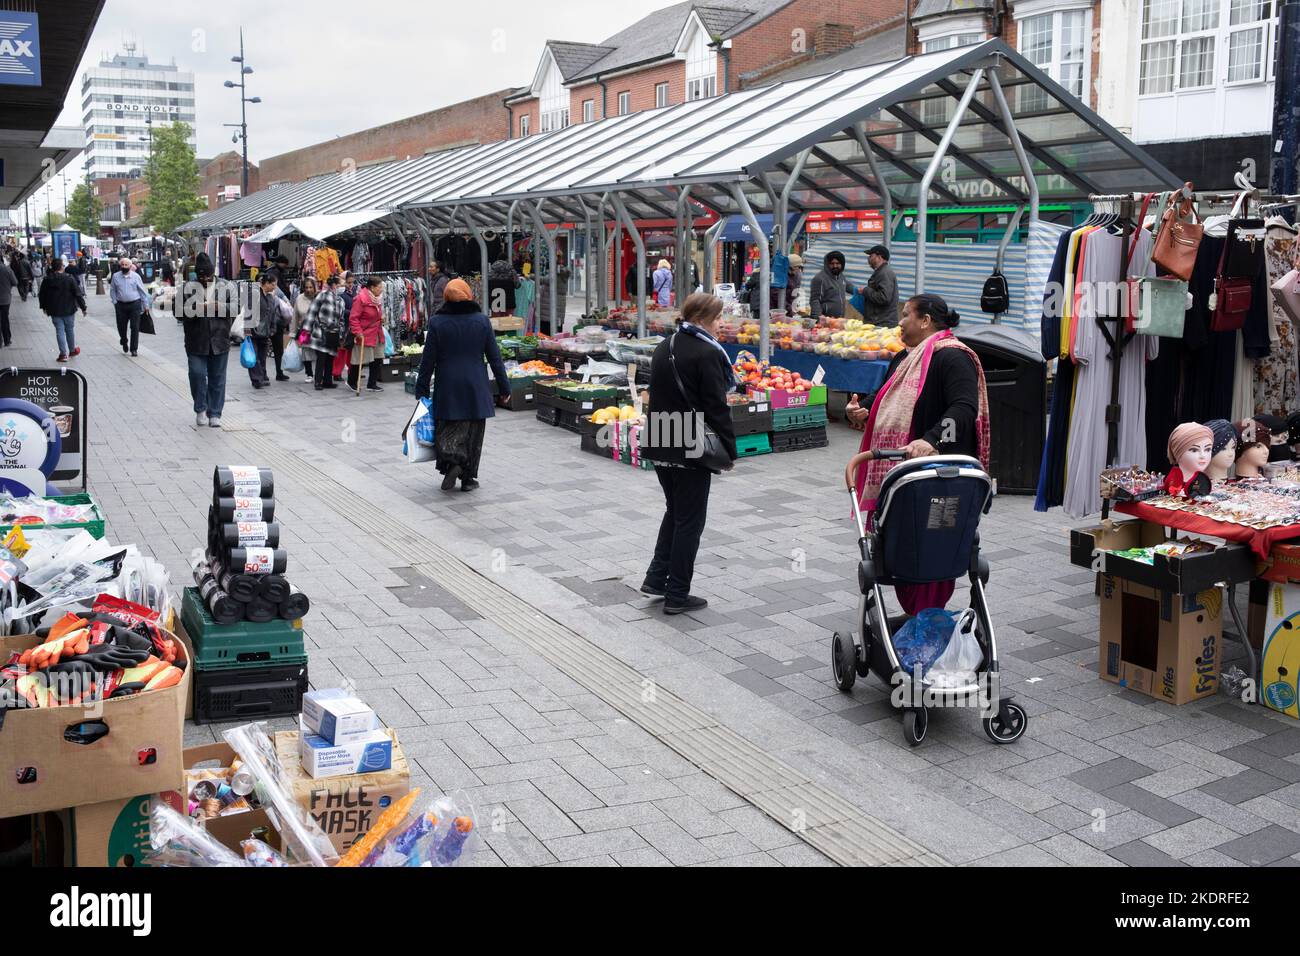 El mercado al aire libre en West Bromwich High Street. Foto de stock